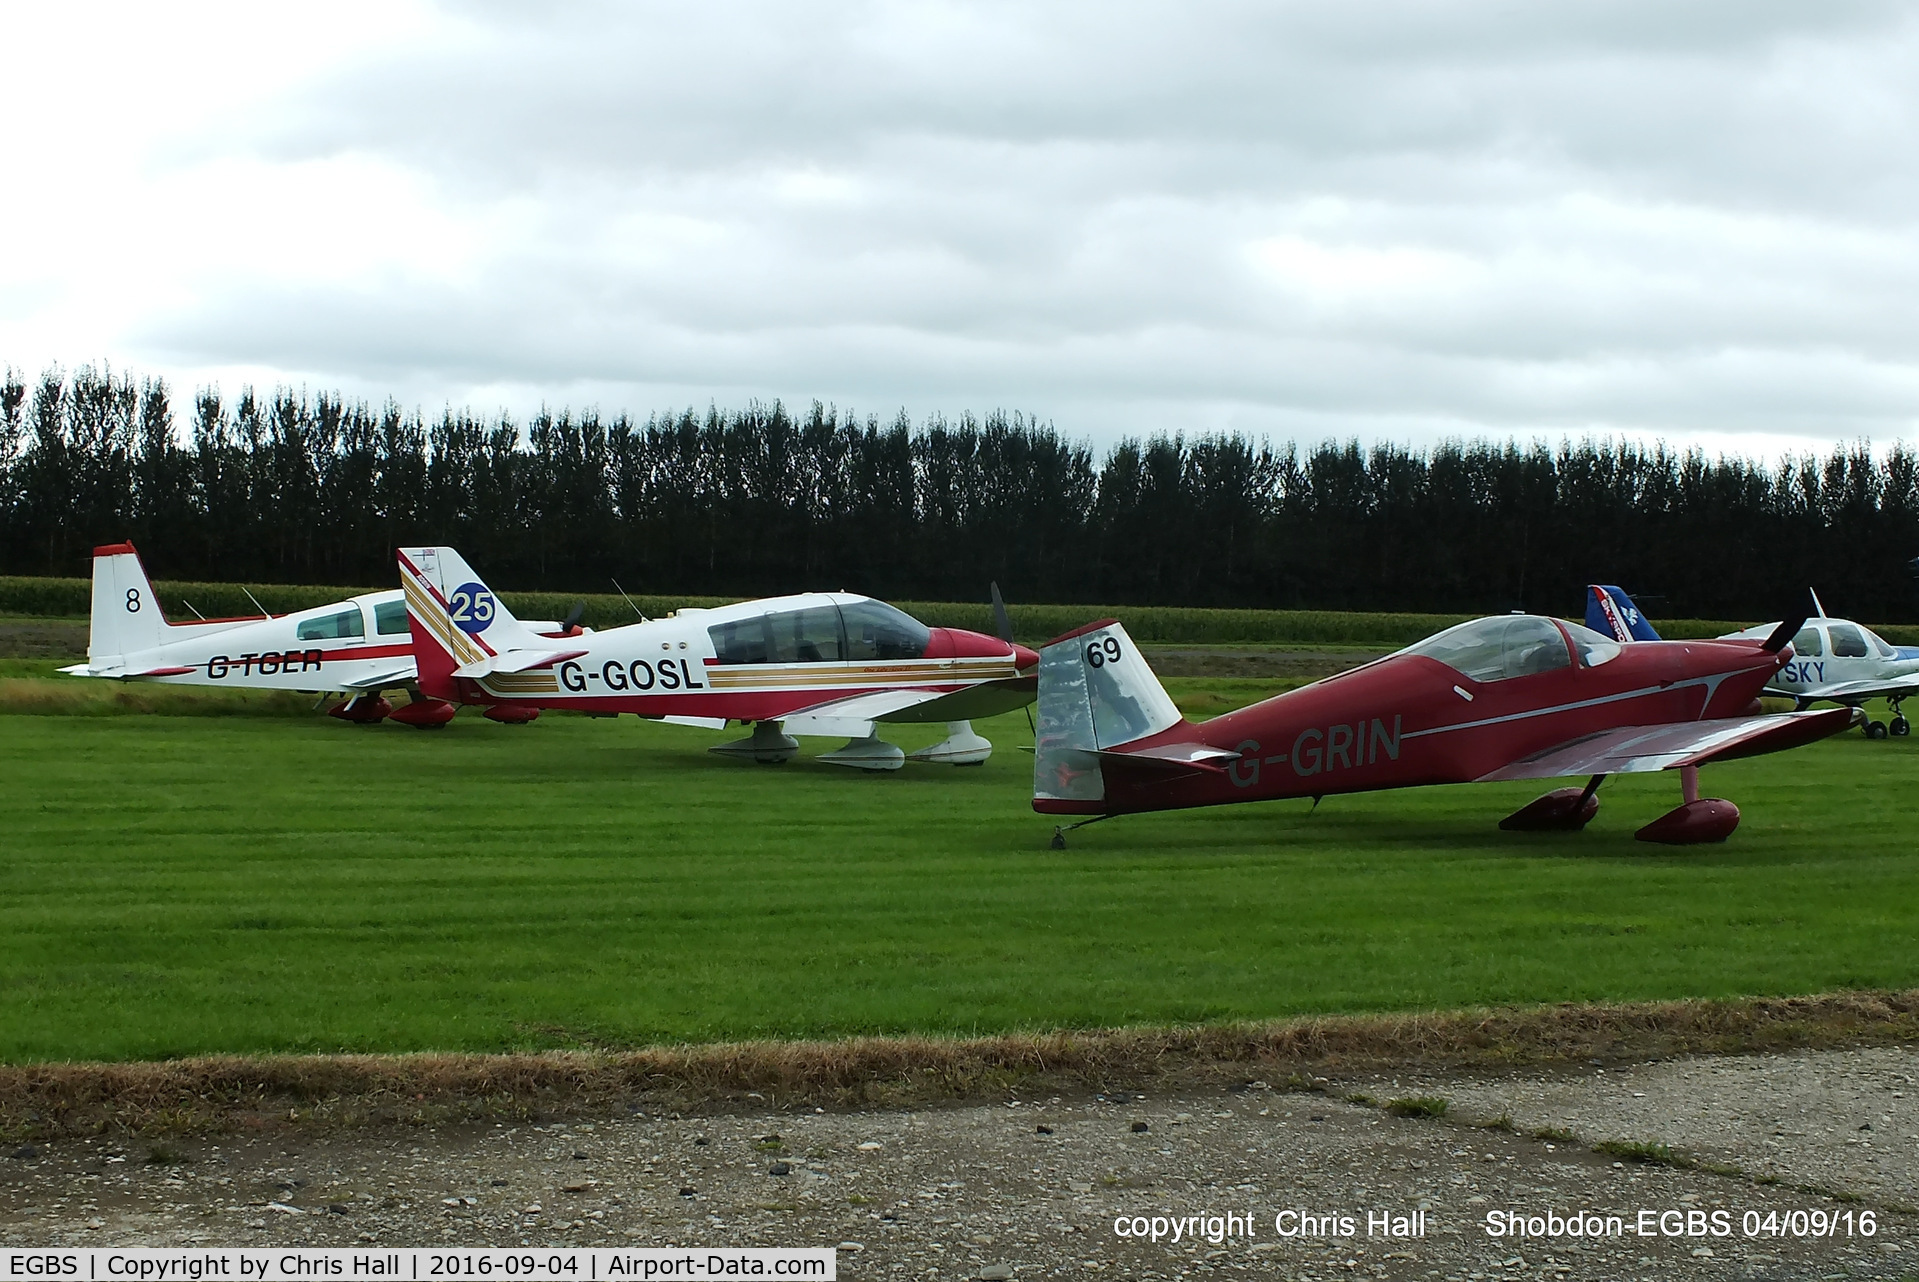 Shobdon Aerodrome Airport, Leominster, England United Kingdom (EGBS) - Royal Aero Club RRRA air race at Shobdon